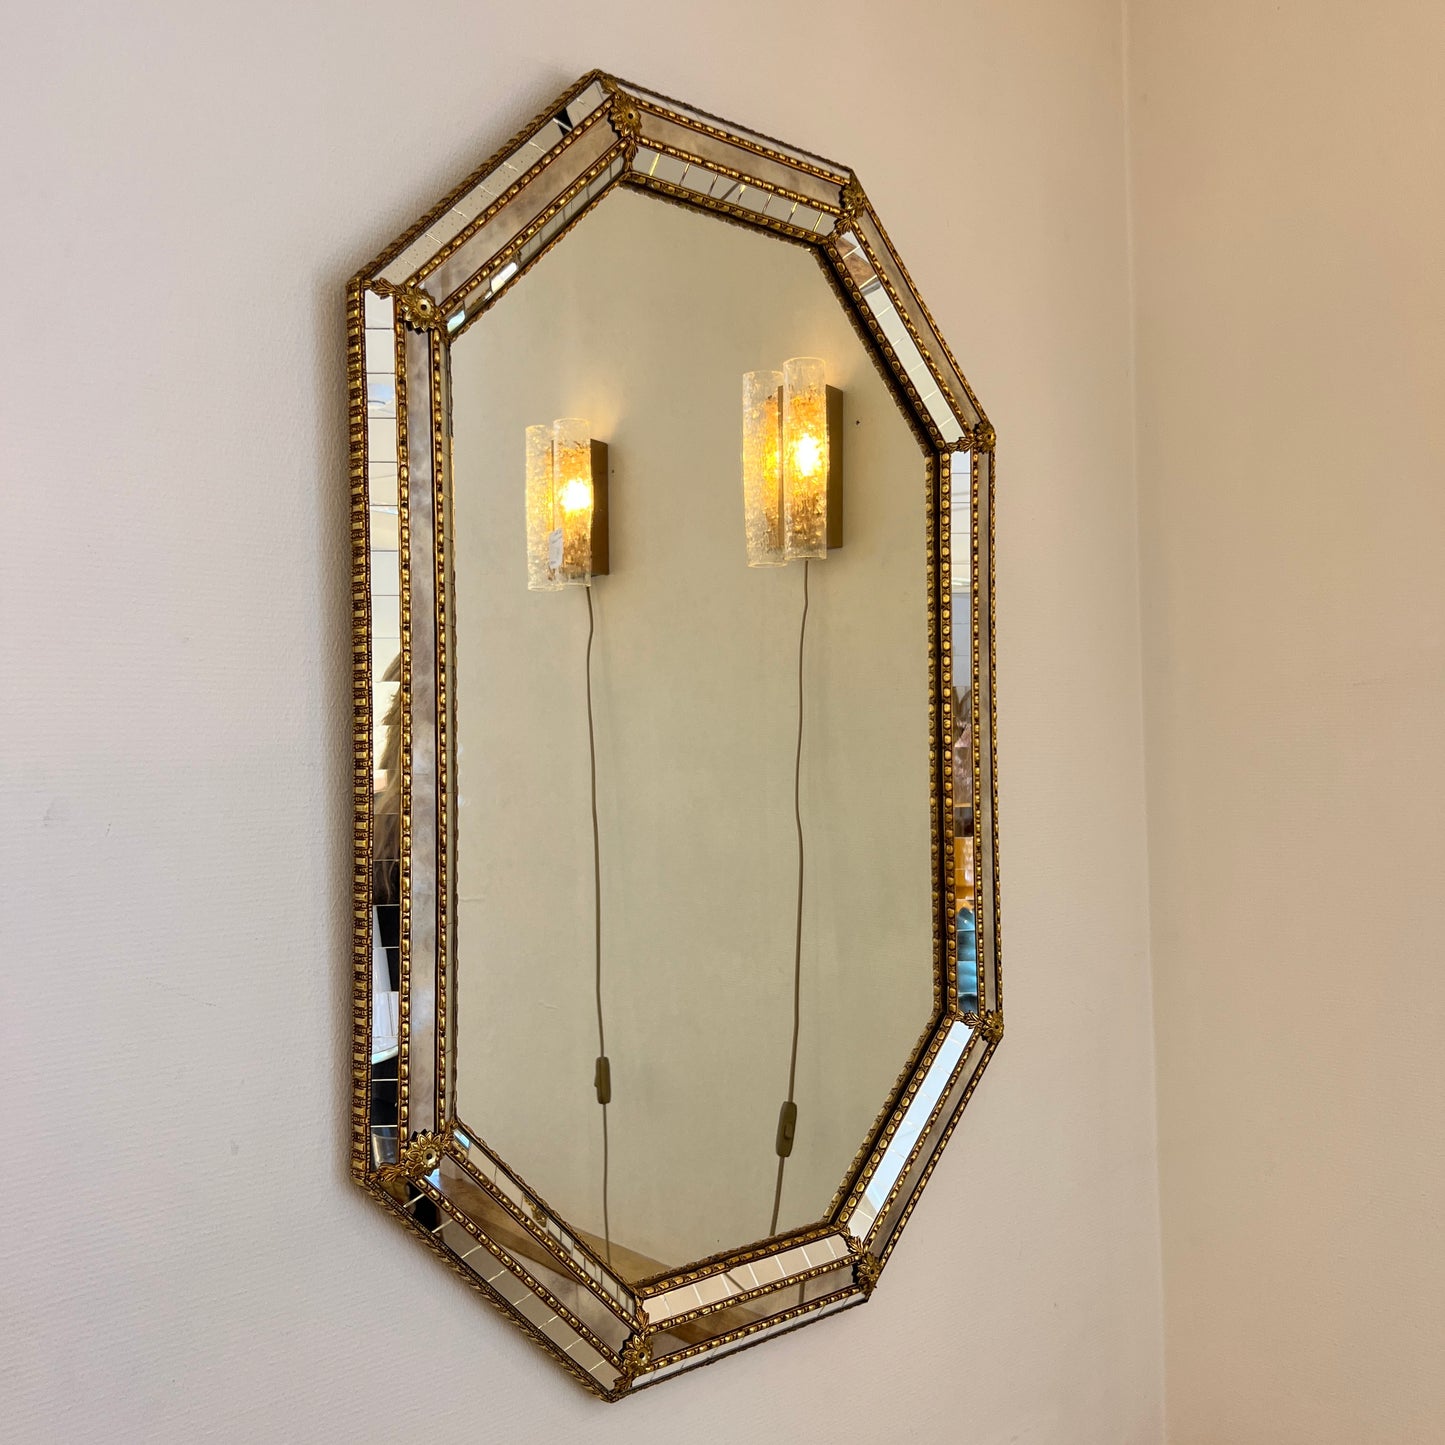 Octagonal Venetian mirror with flowers